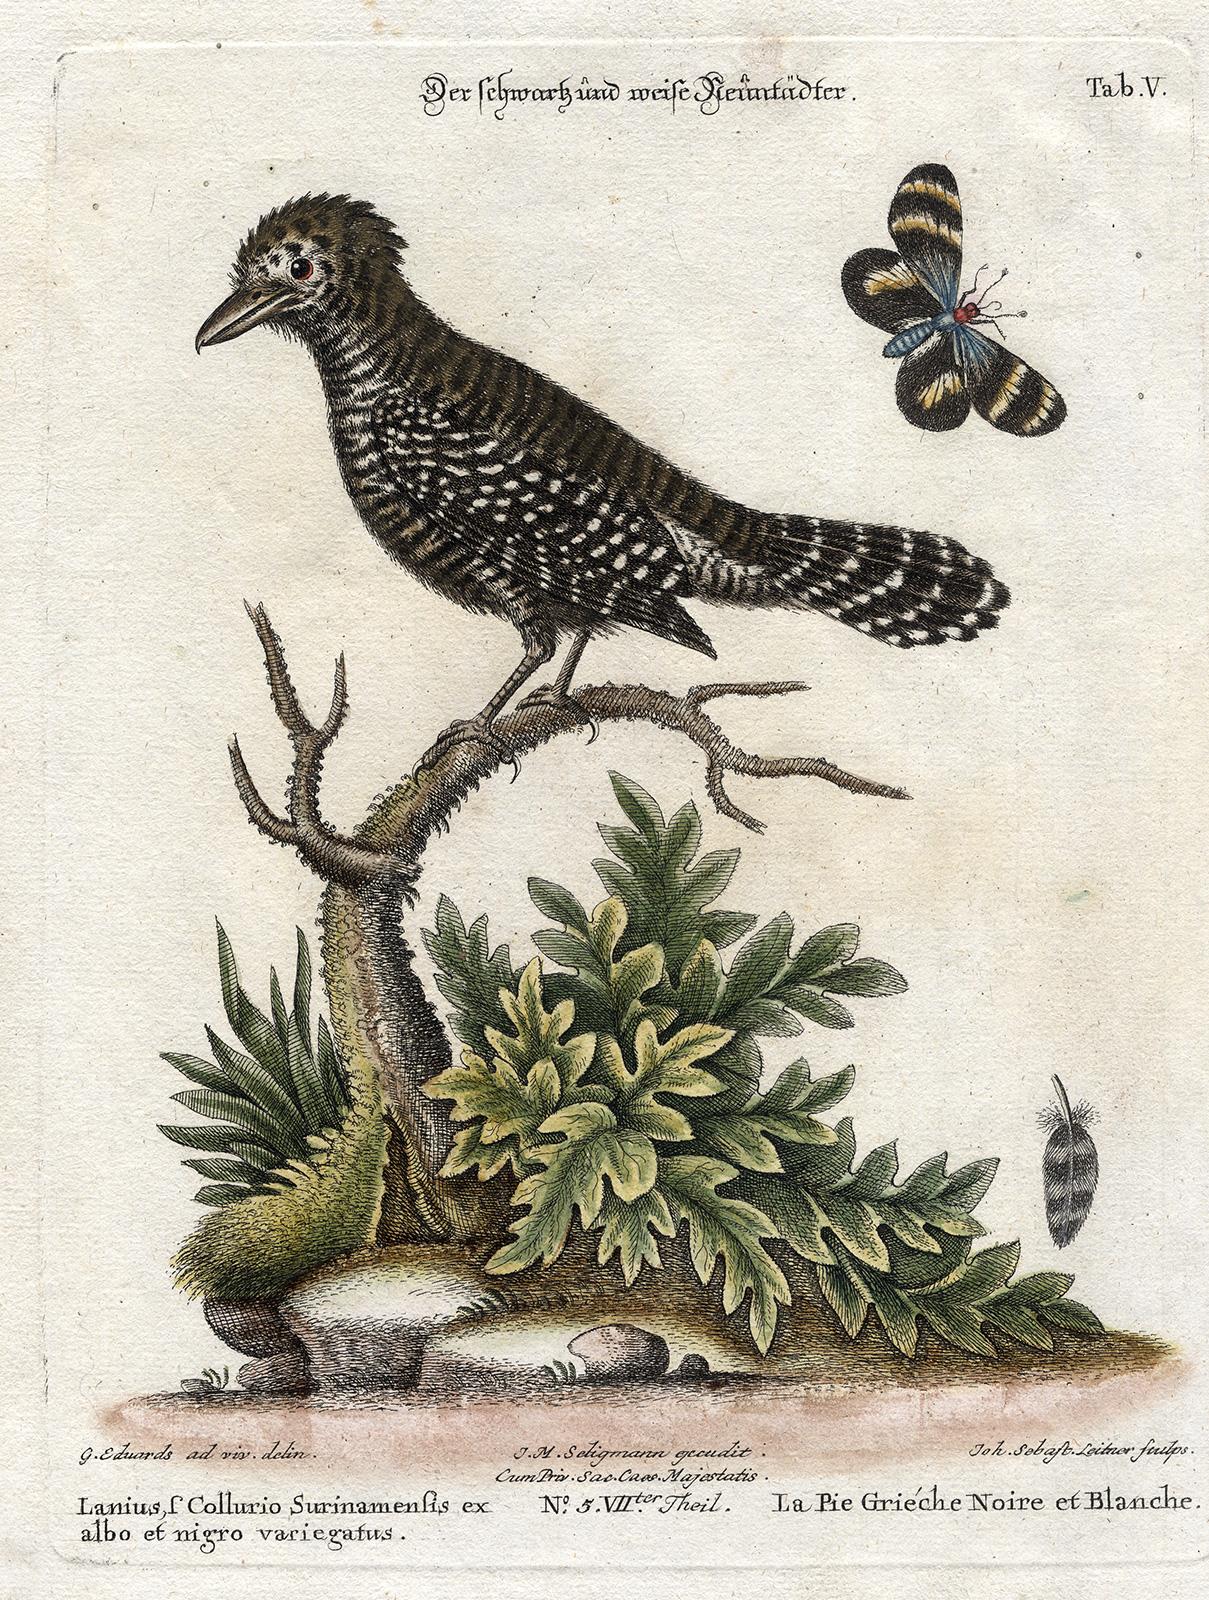 Black and White Butcher-Bird by Seligmann - Handcoloured etching - 18th century - Print by Johann Michael Seligmann